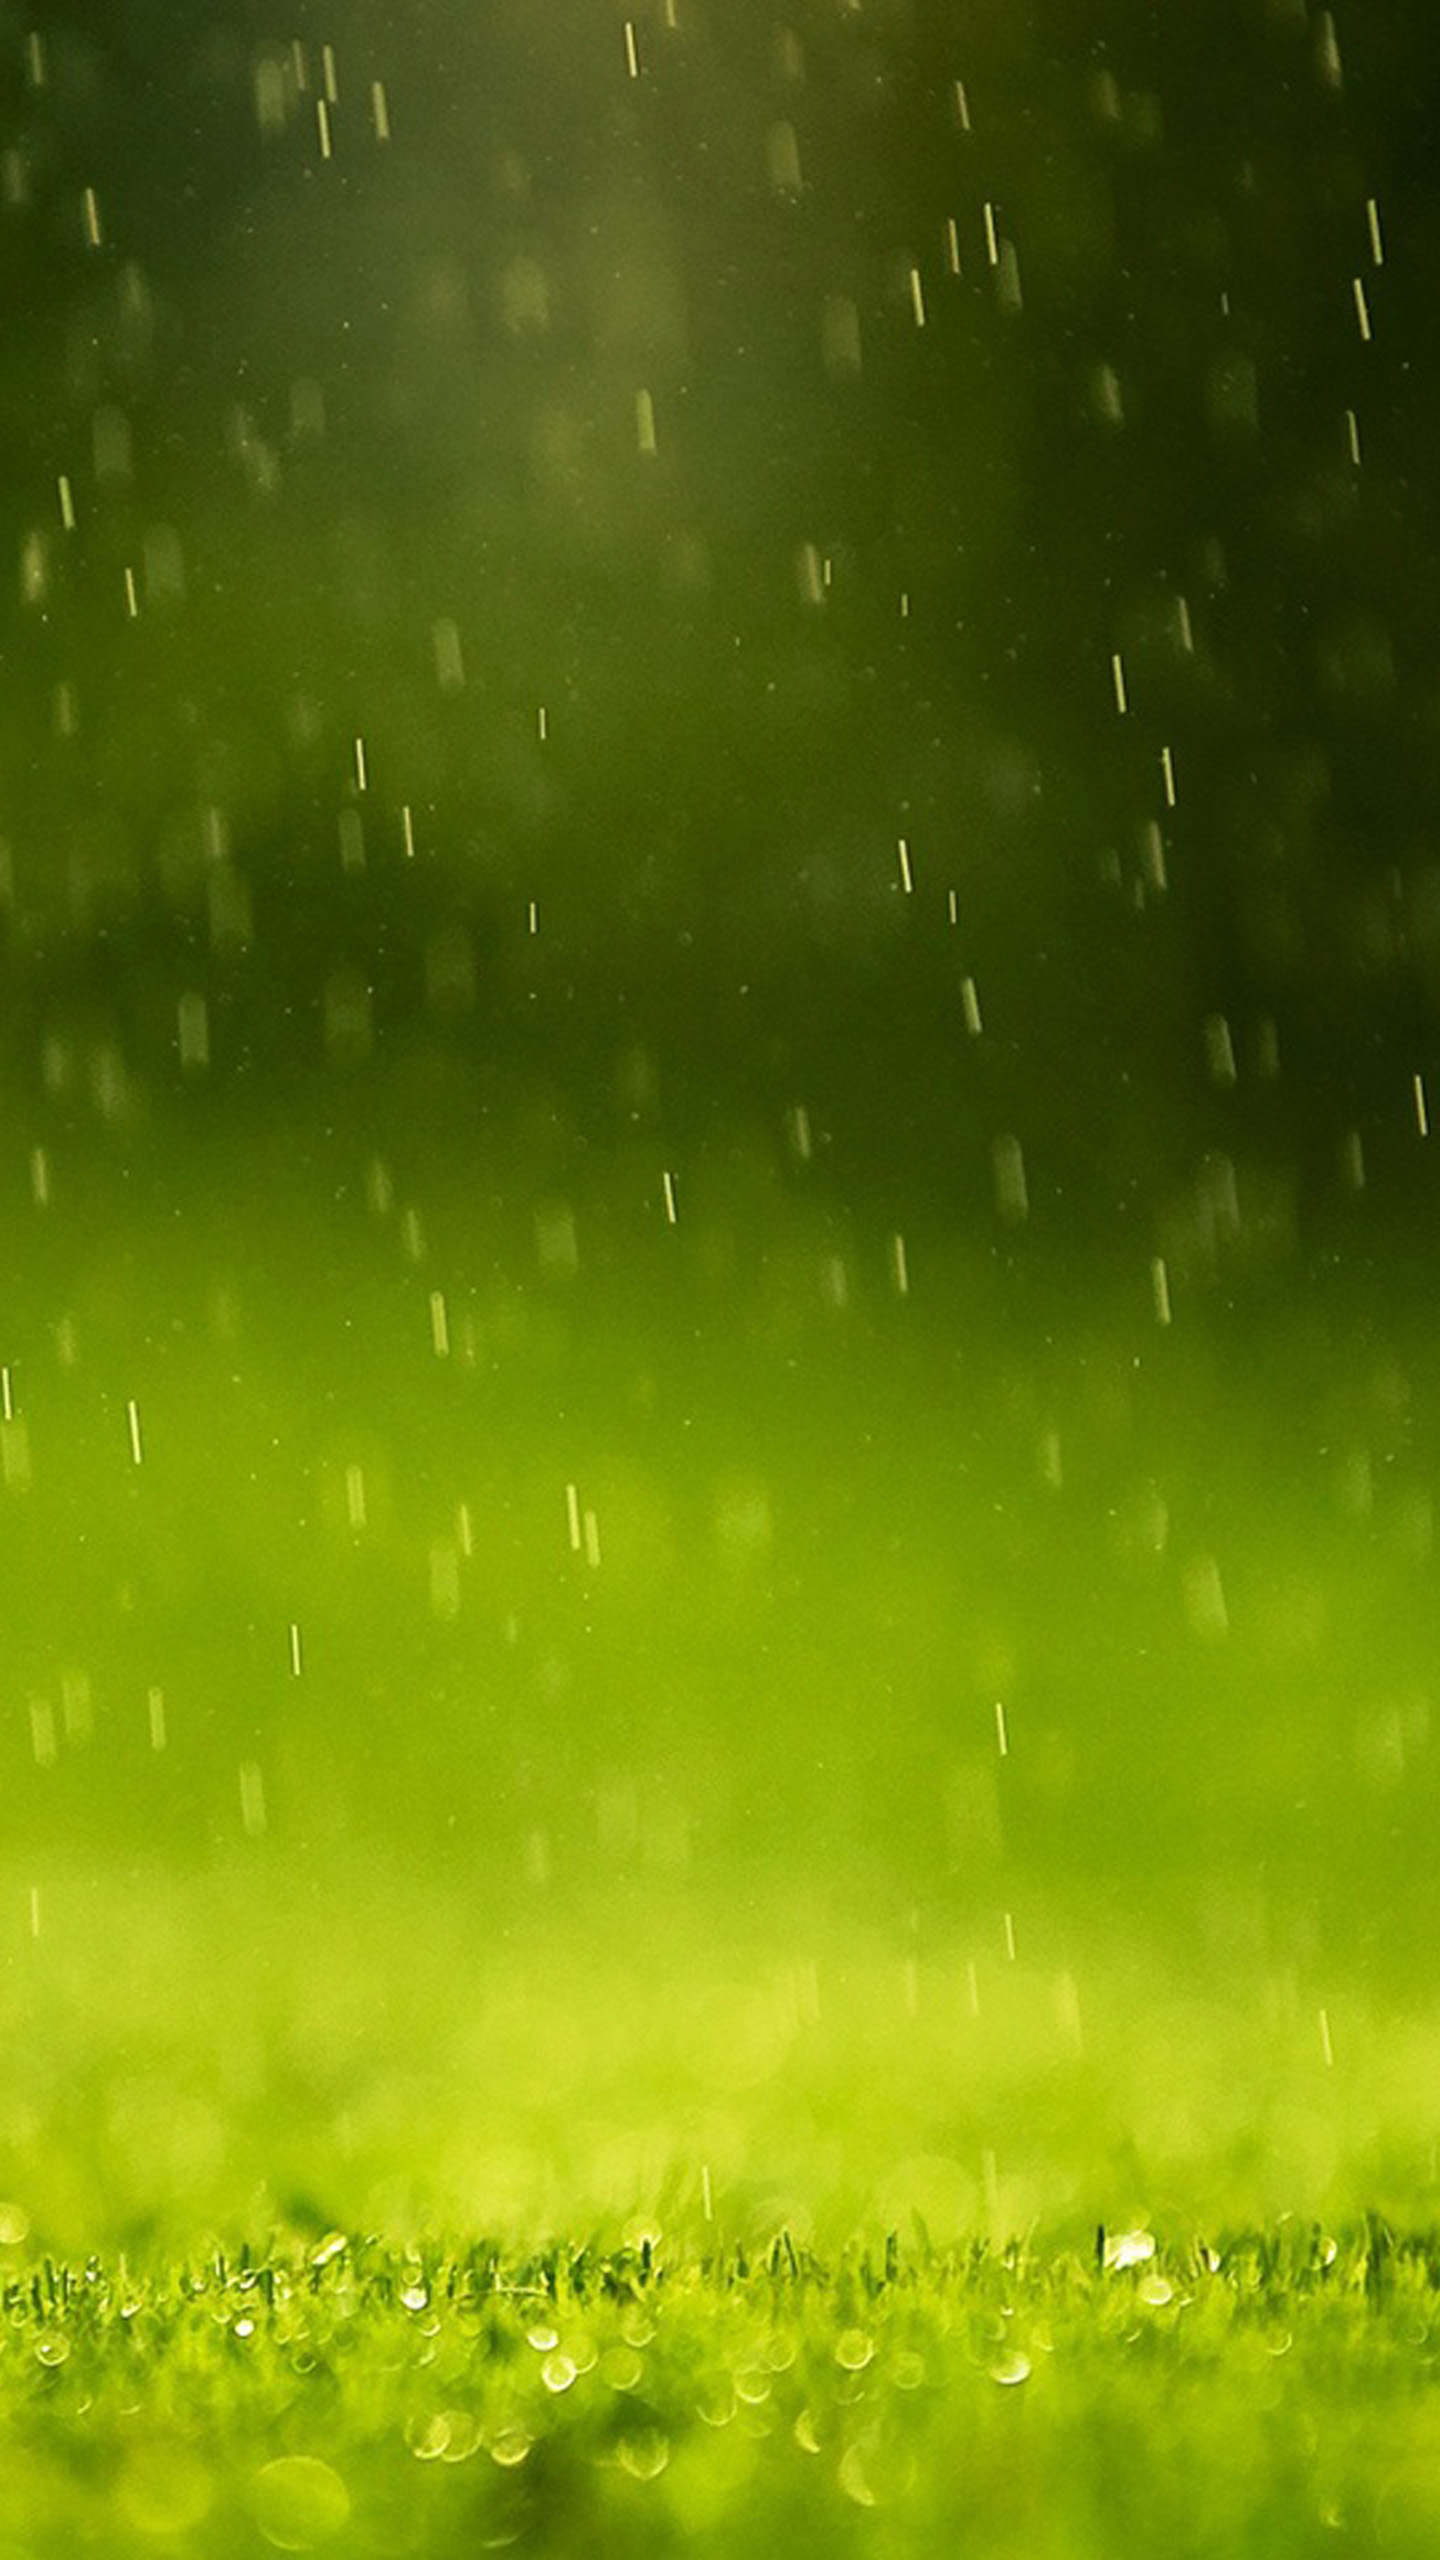 Green rain drops Wallpapers for Galaxy S6.jpg